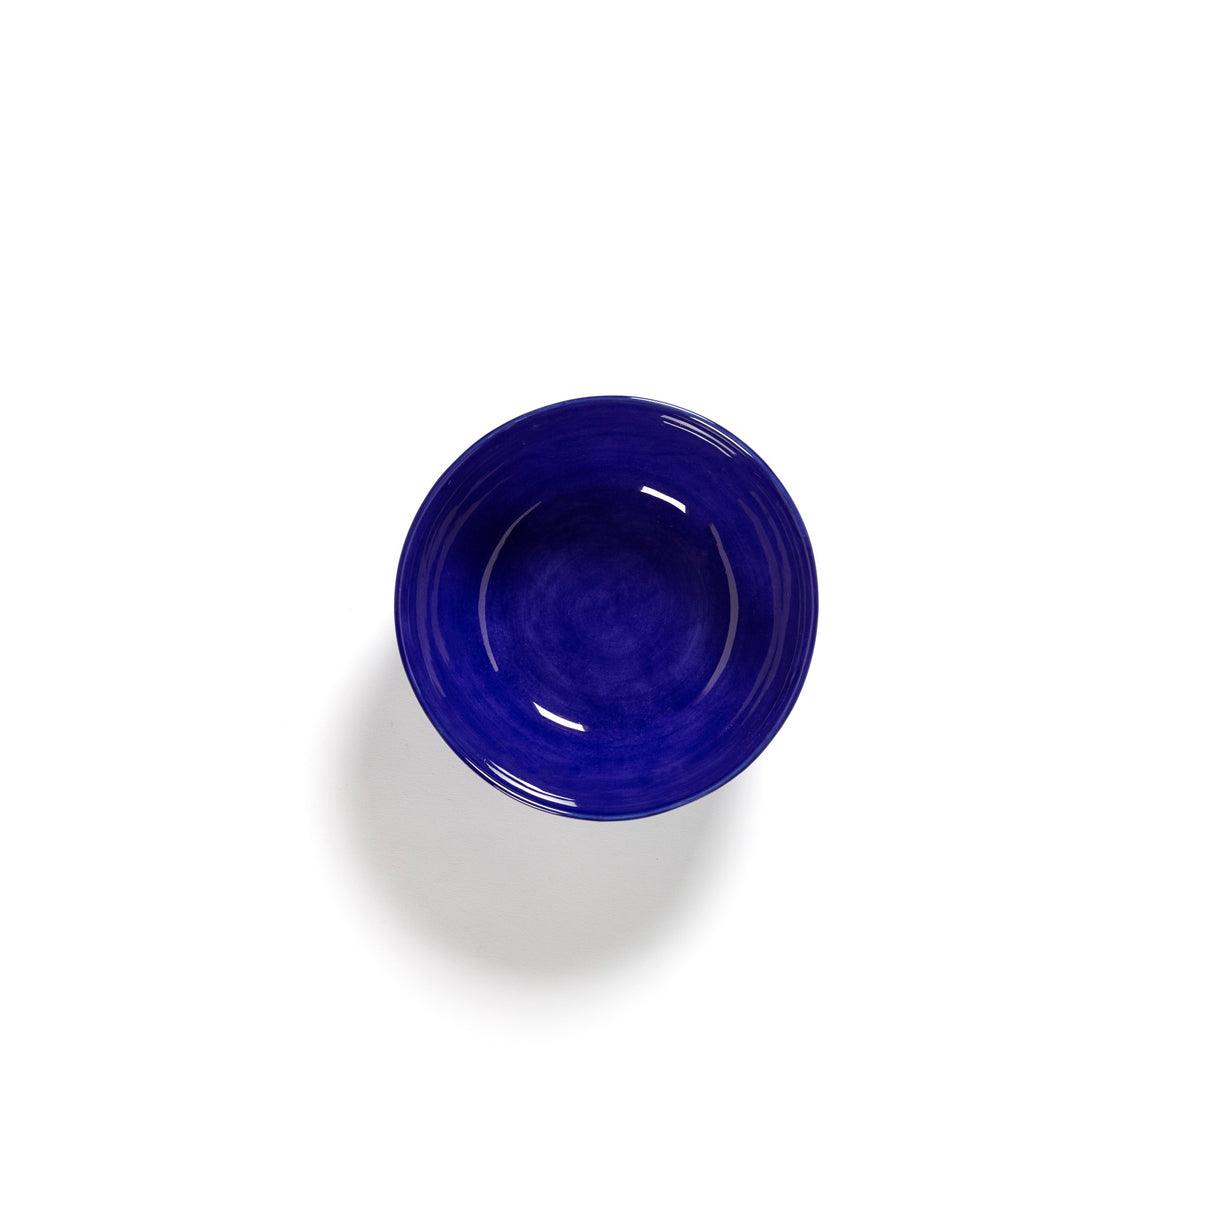 Ottolenghi Schüssel 4-er Set Lapis Lazuli Swirl-Stripes, Blau-Weiß, D 18 cm